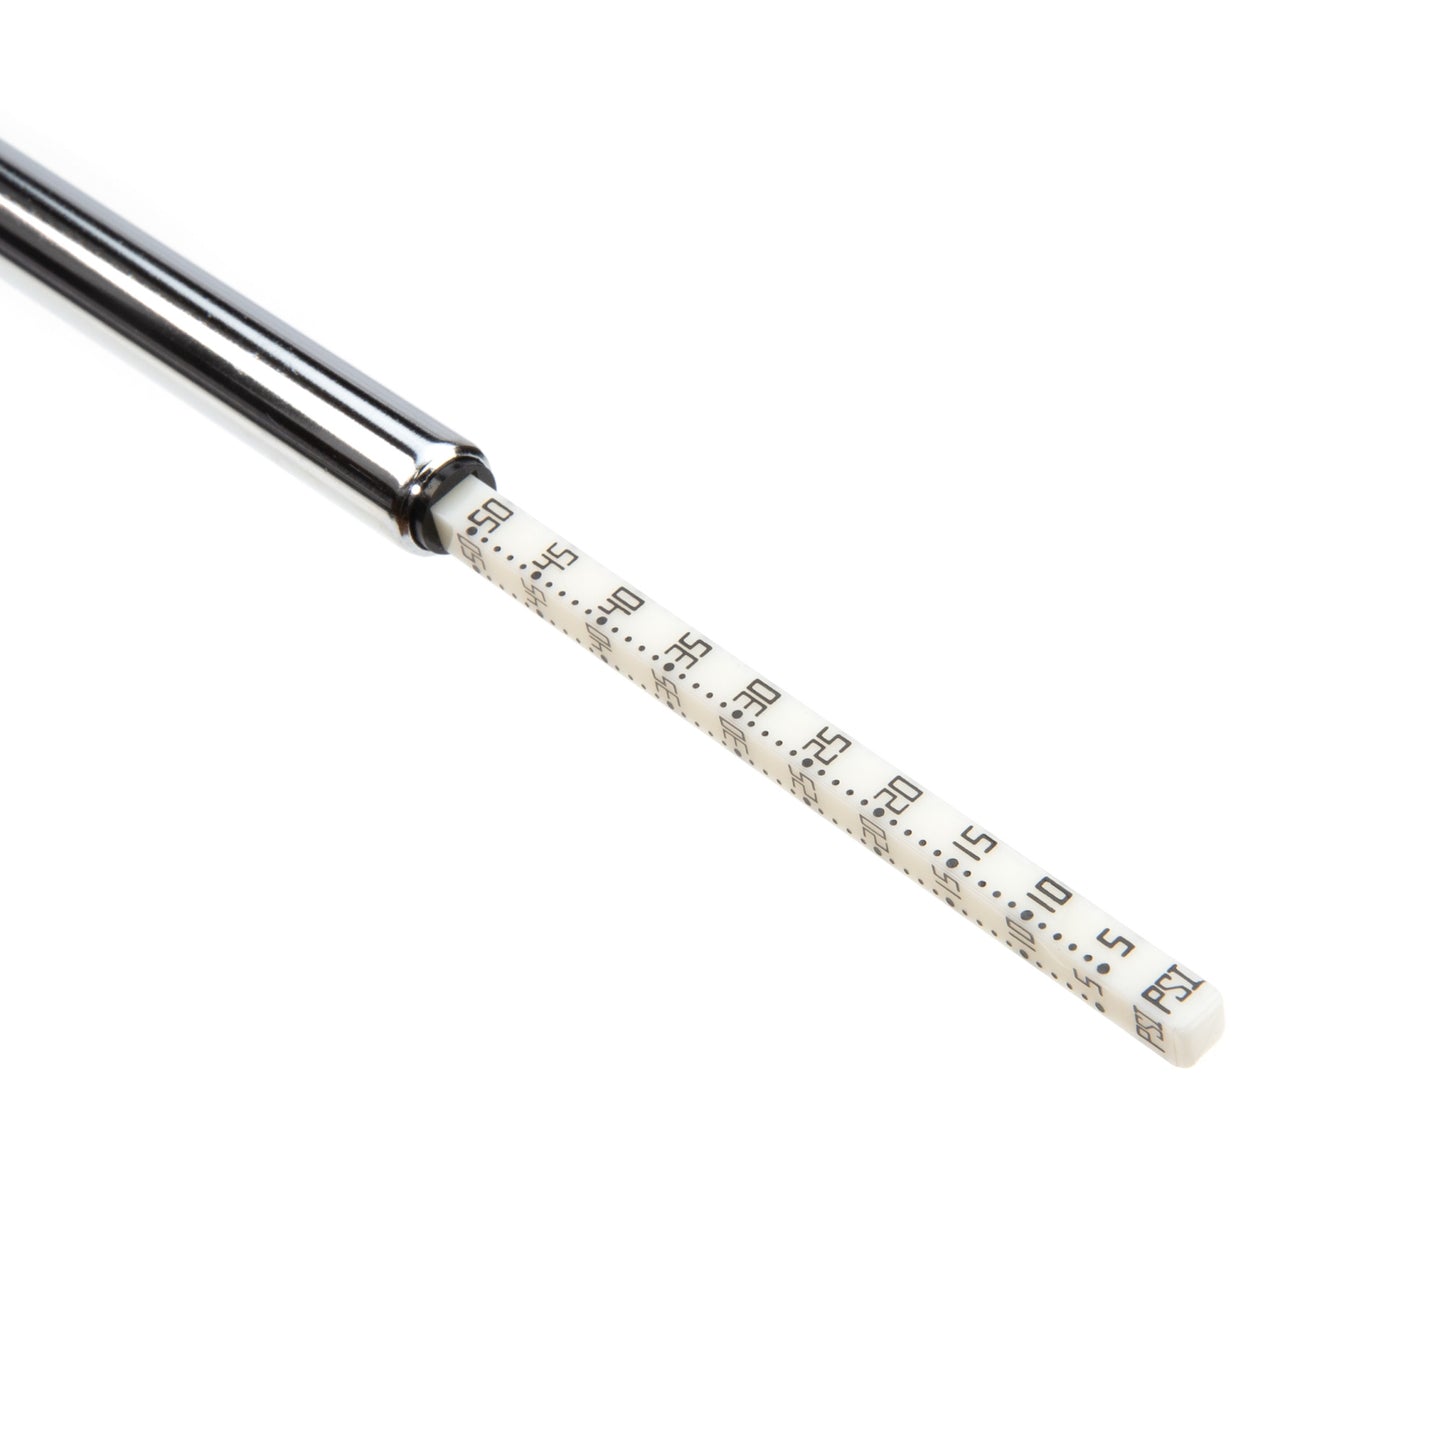 5-50 PSI Polished Steel Pencil Air Gauge, 5-pack